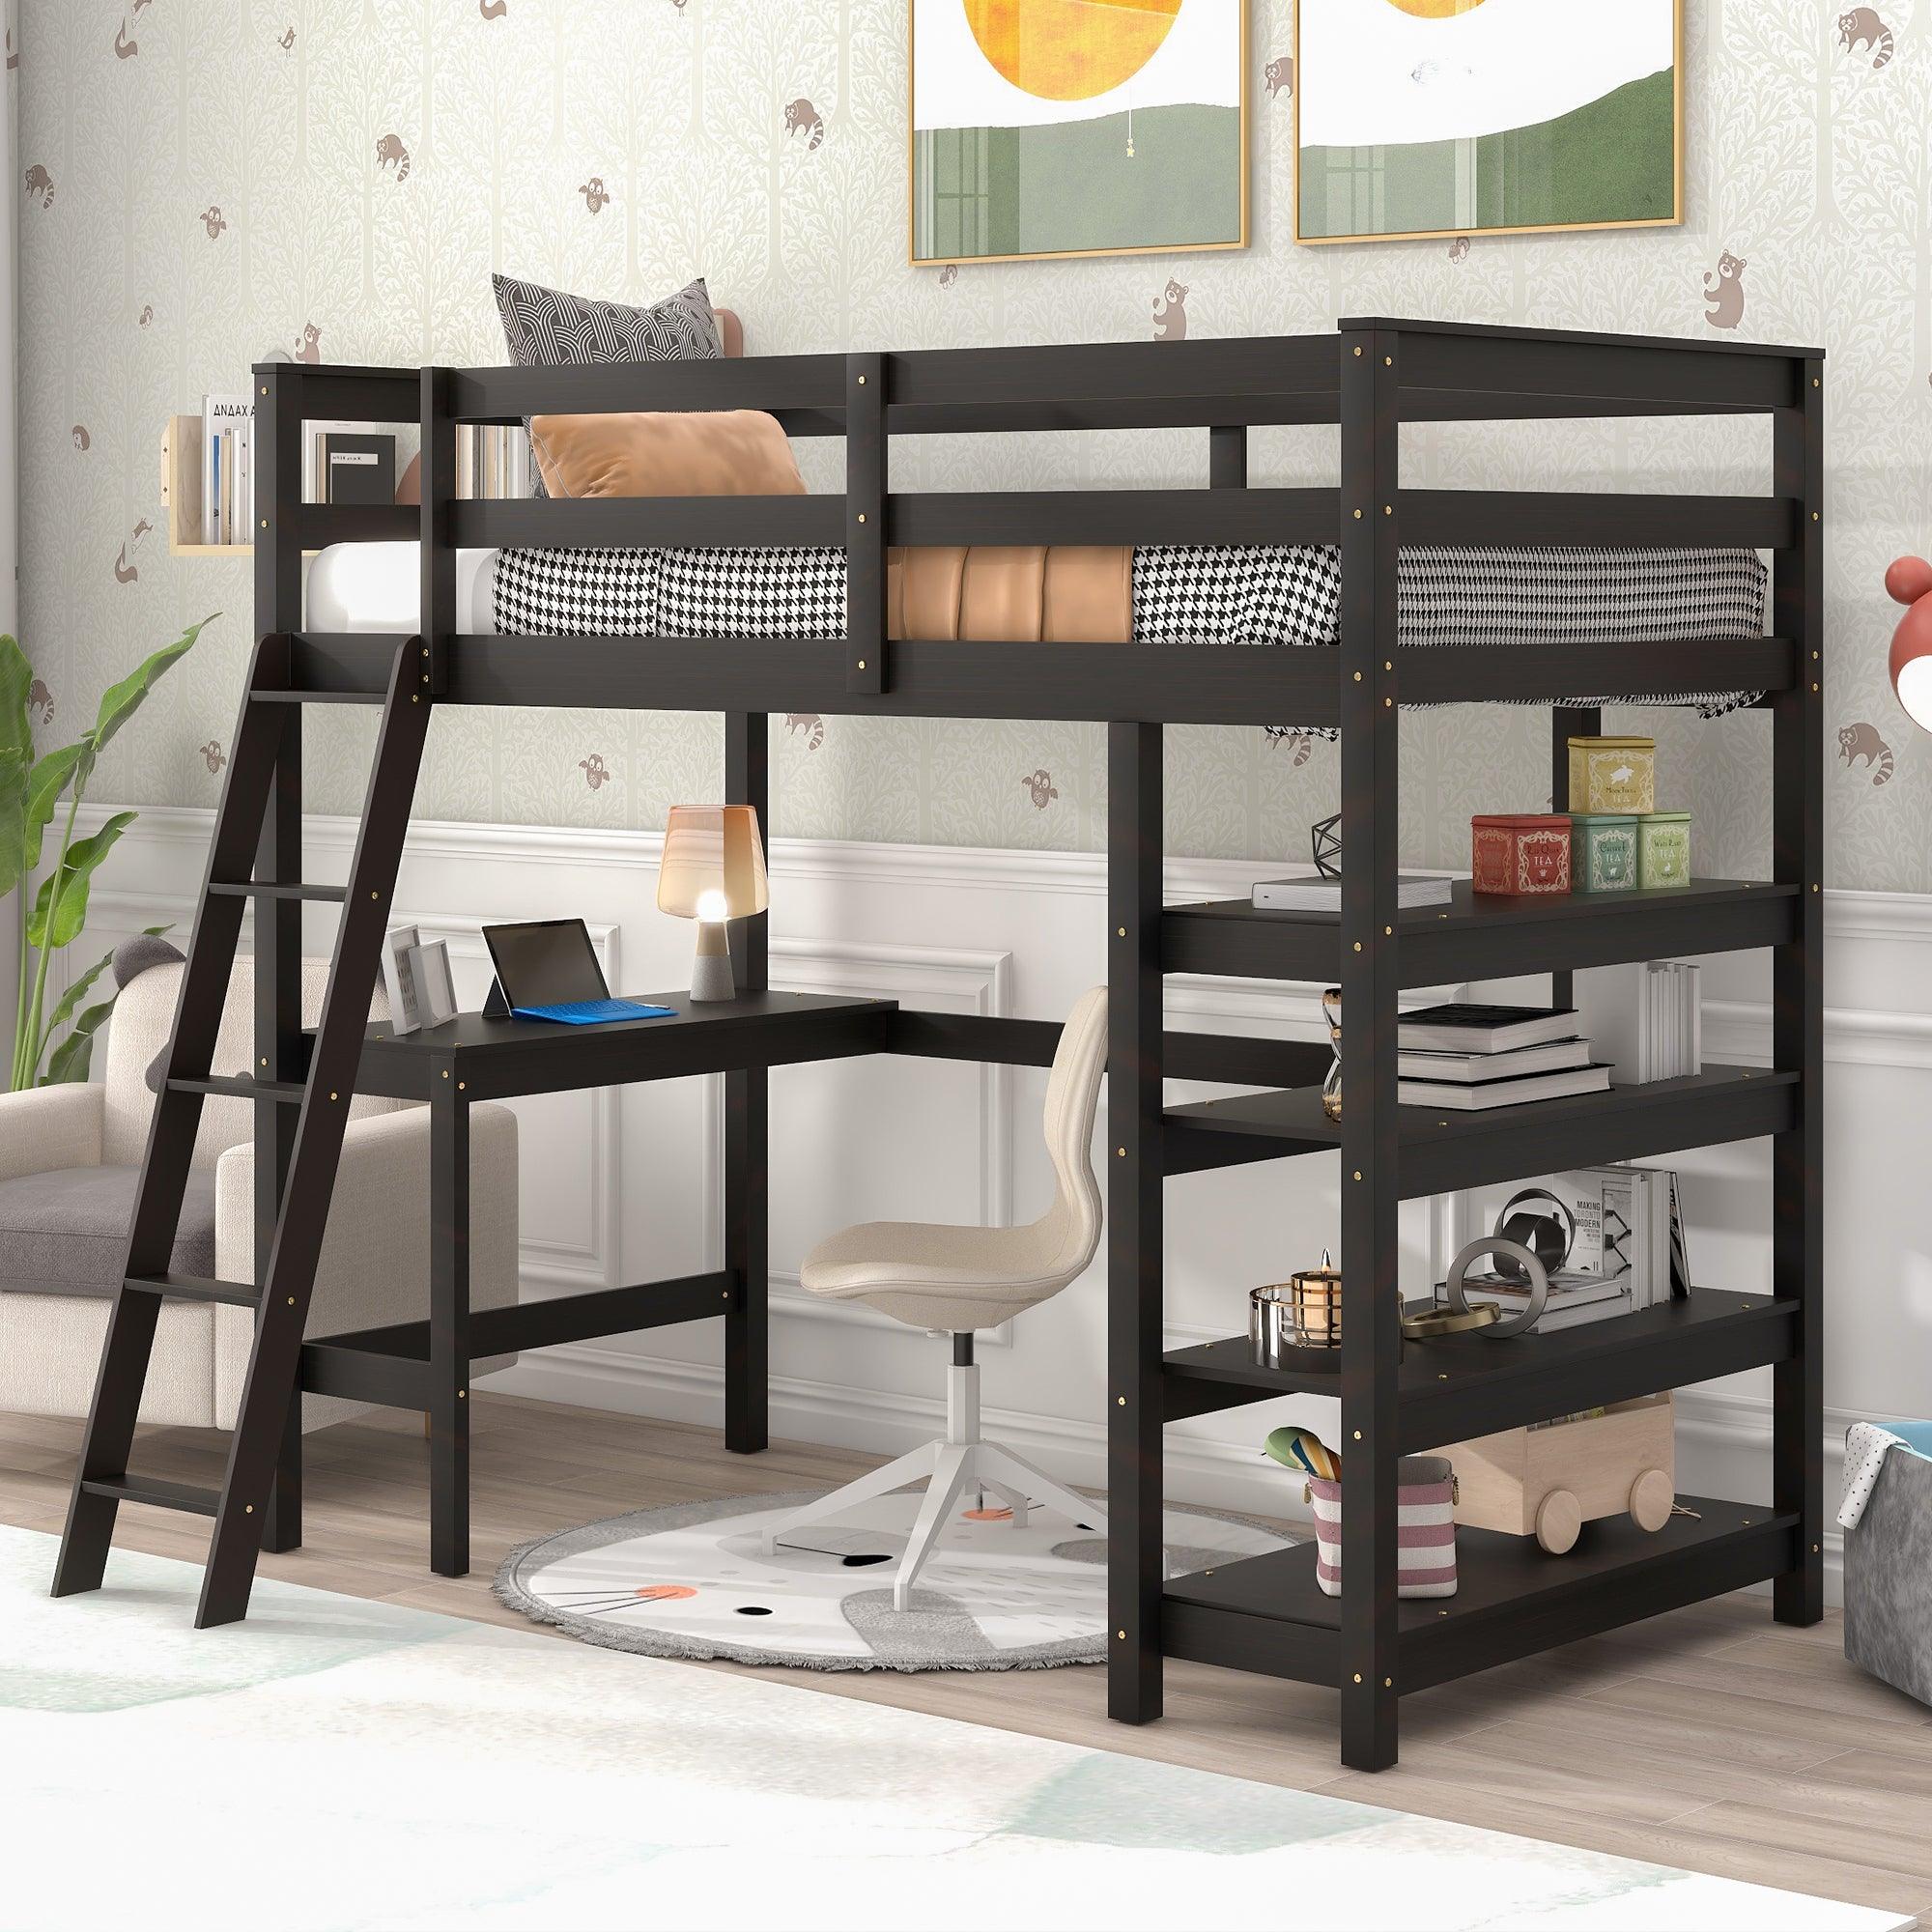 🆓🚛 Twin Loft Bed With Desk, Ladder, Shelves, Espresso